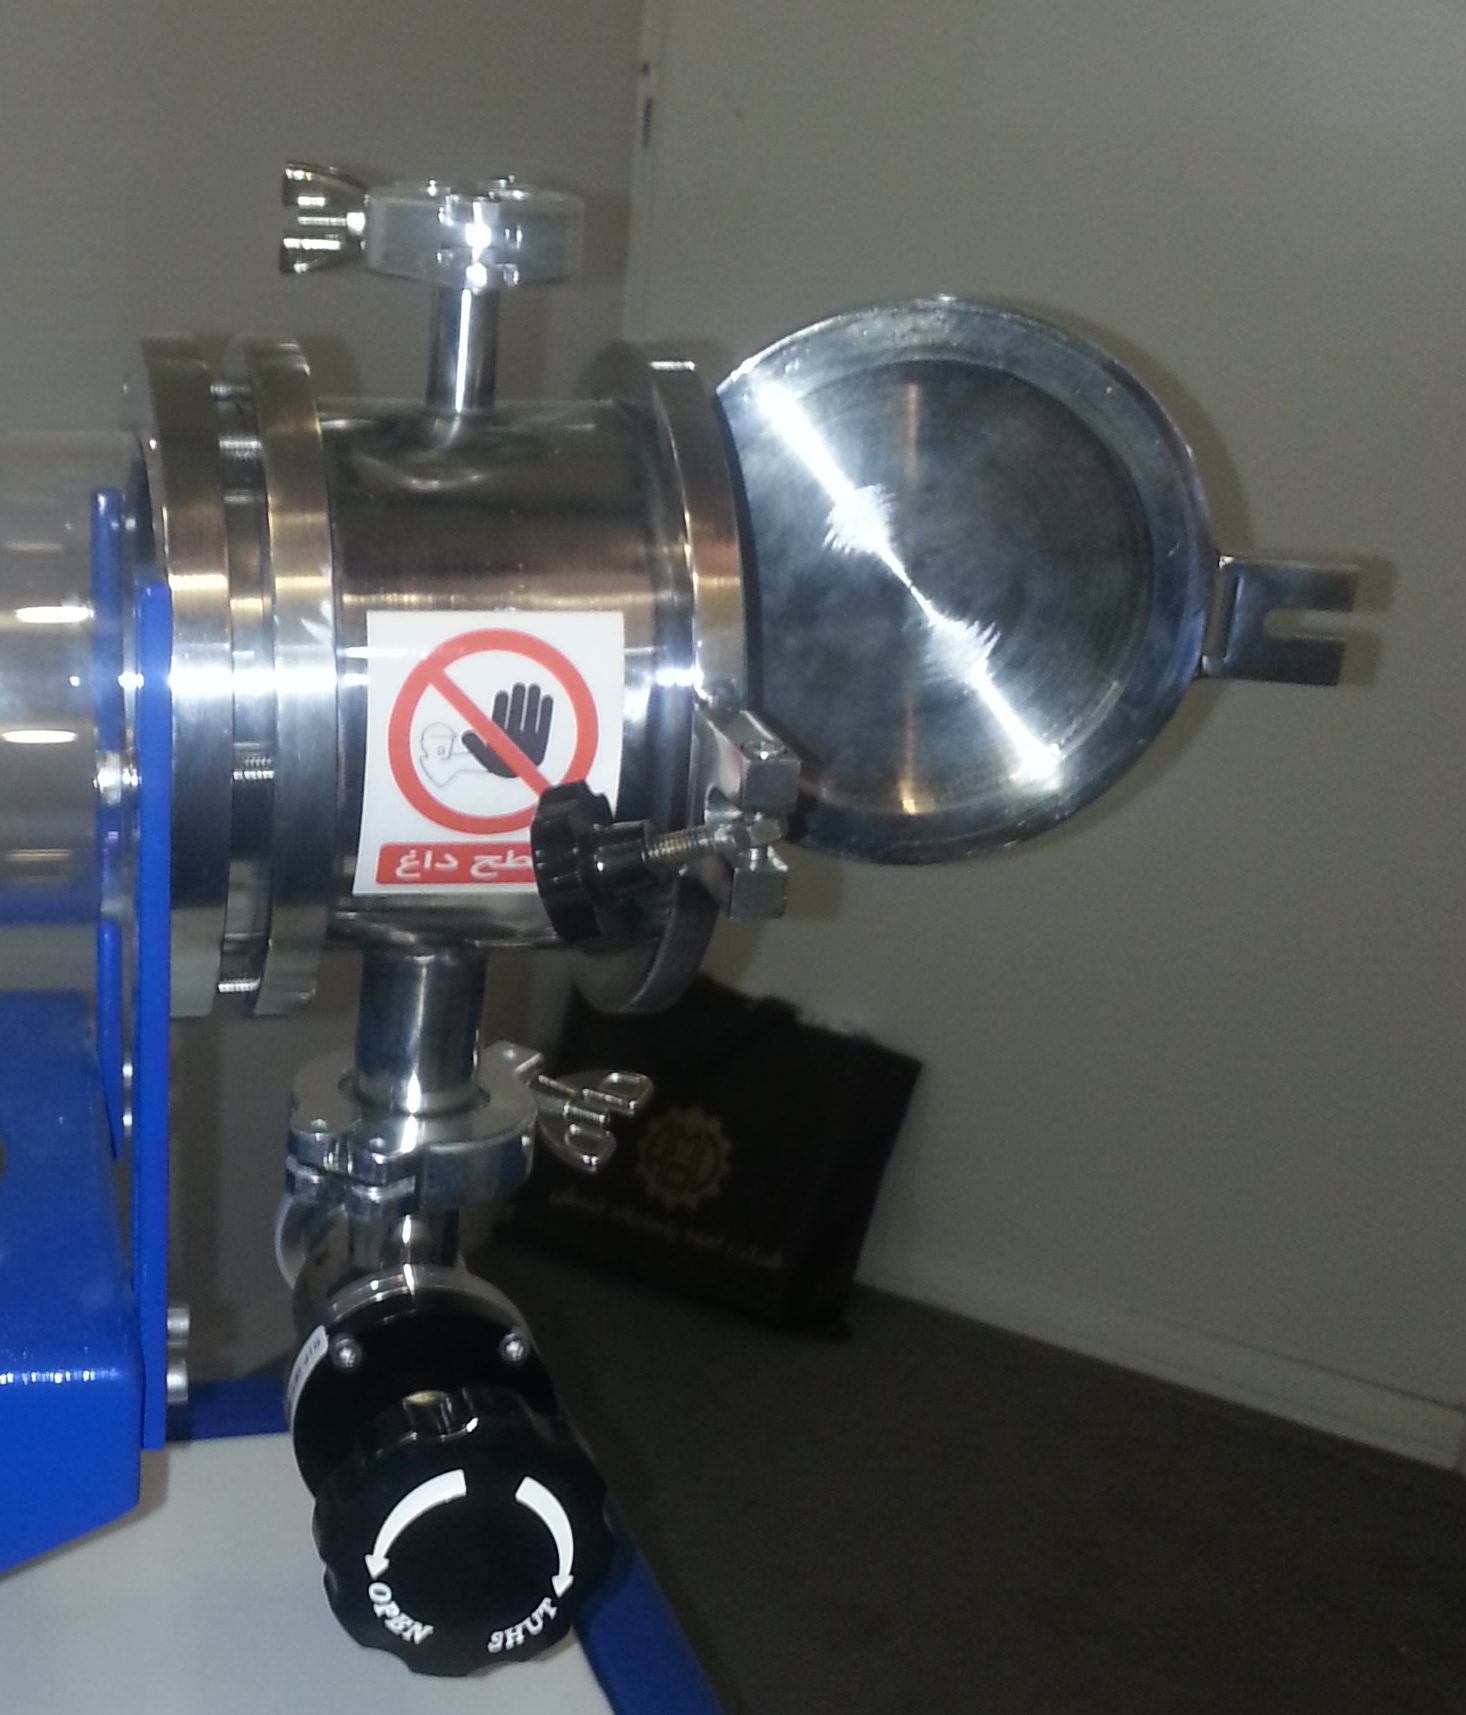 TCVD-سیستم لایه نشانی رسوب شیمیایی بخار 1200 درجه (قطر 5 سانتیمتر/تحت خلاء/کنترل گاز توسط MFC)